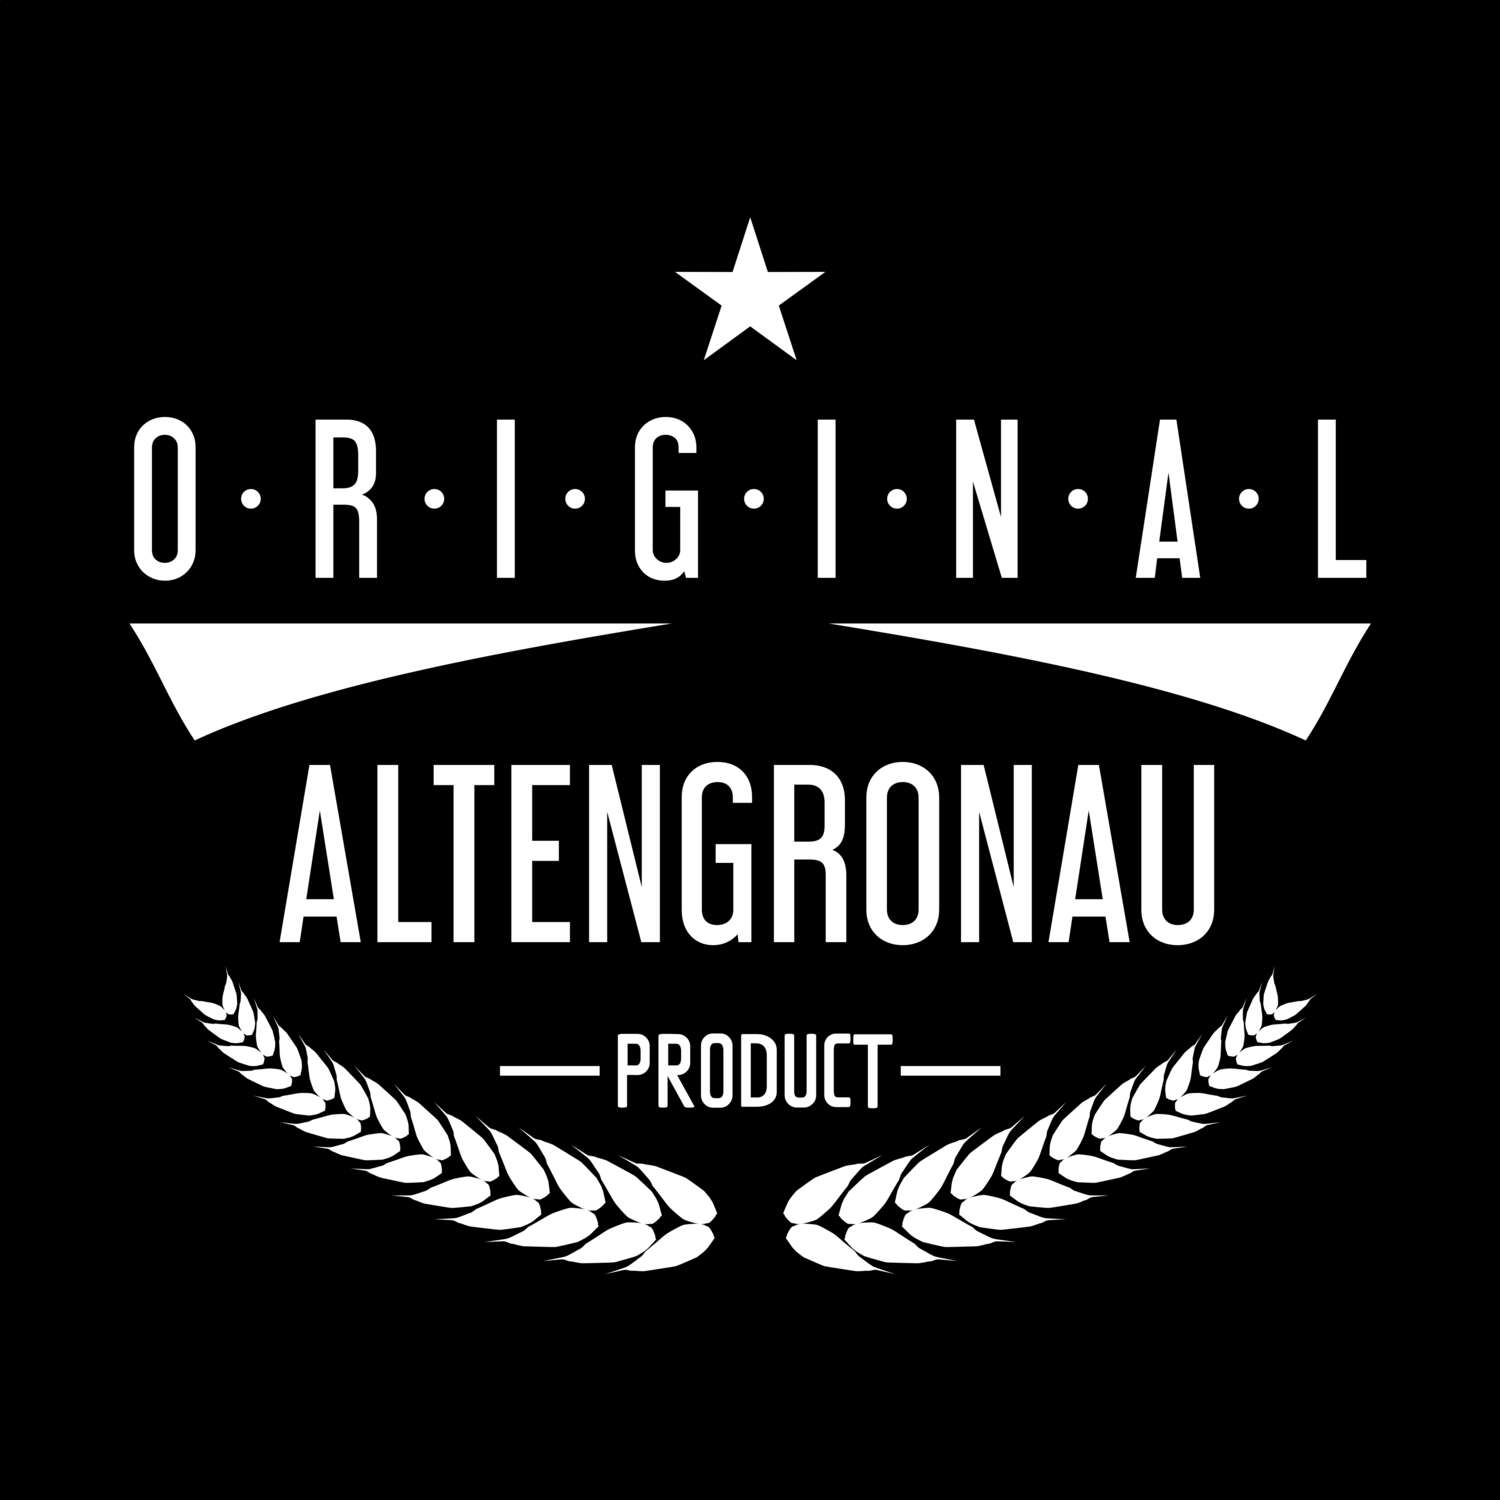 Altengronau T-Shirt »Original Product«